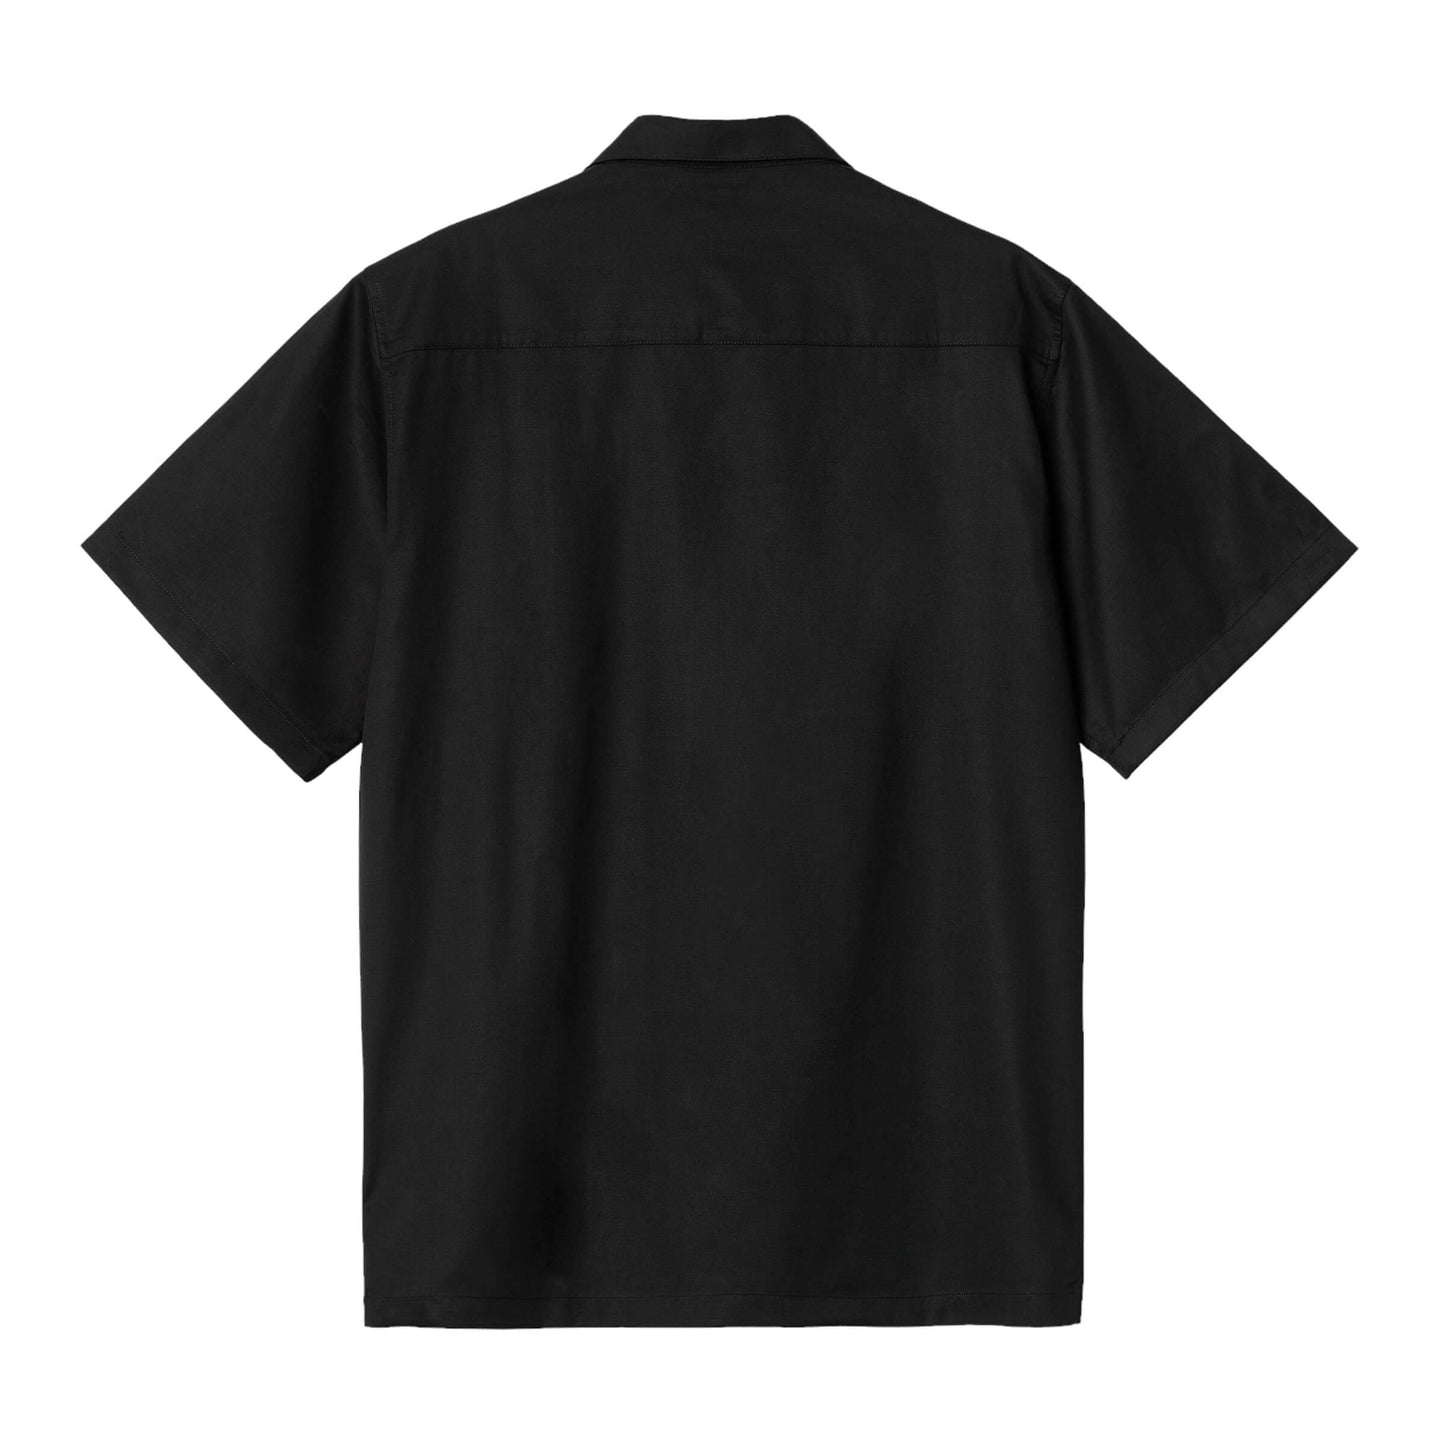 Carhartt WIP S/S Delray Shirt-black-wax